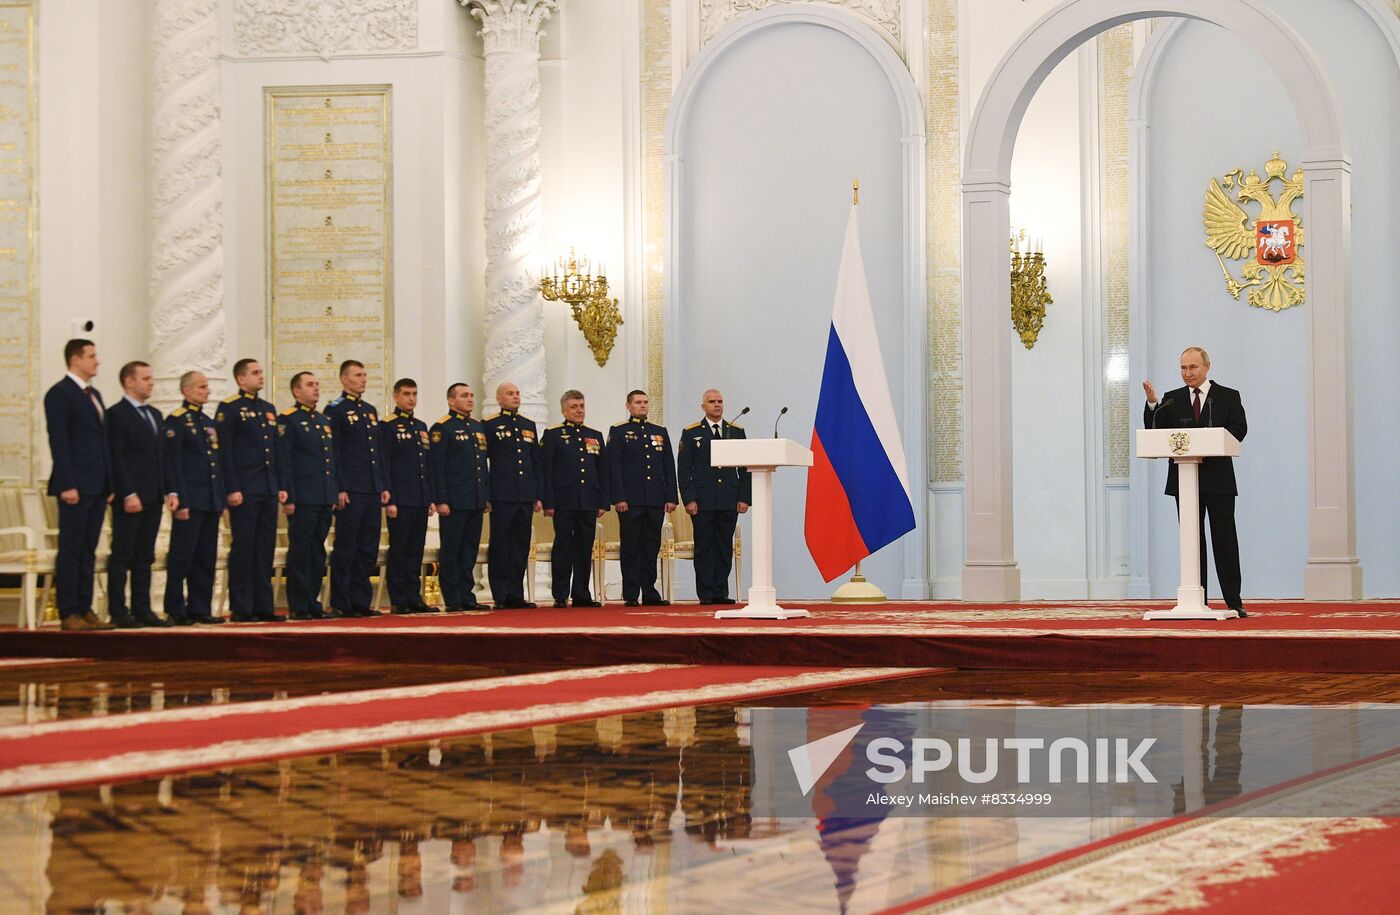 Russia Putin Gold Star Medals Awarding